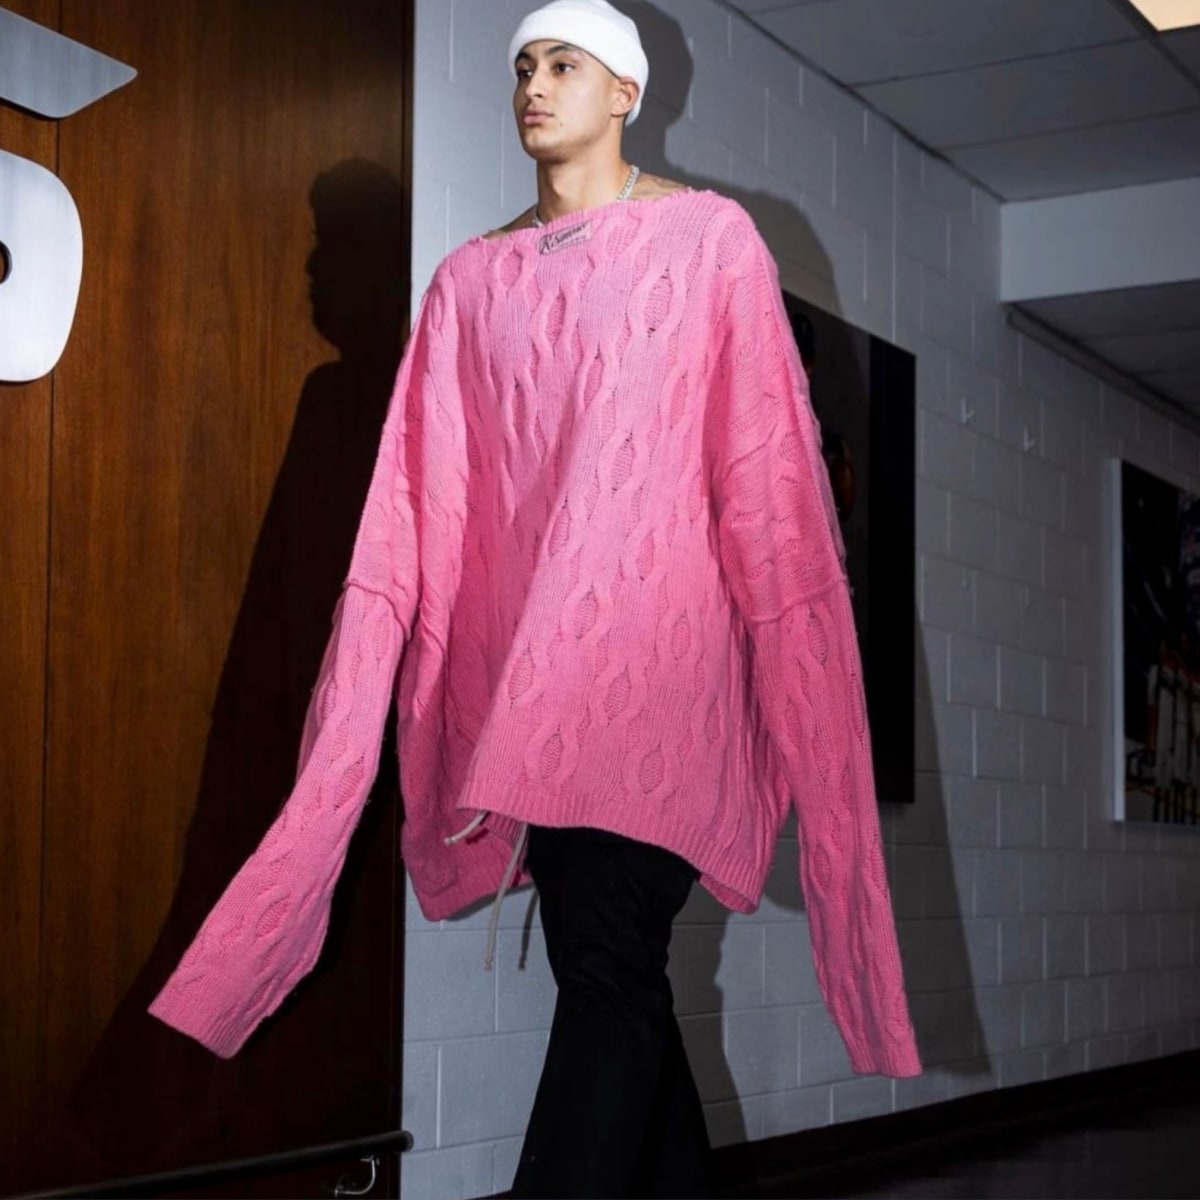 Fans Roast Kyle Kuzma's Pre-Game Outfit: 